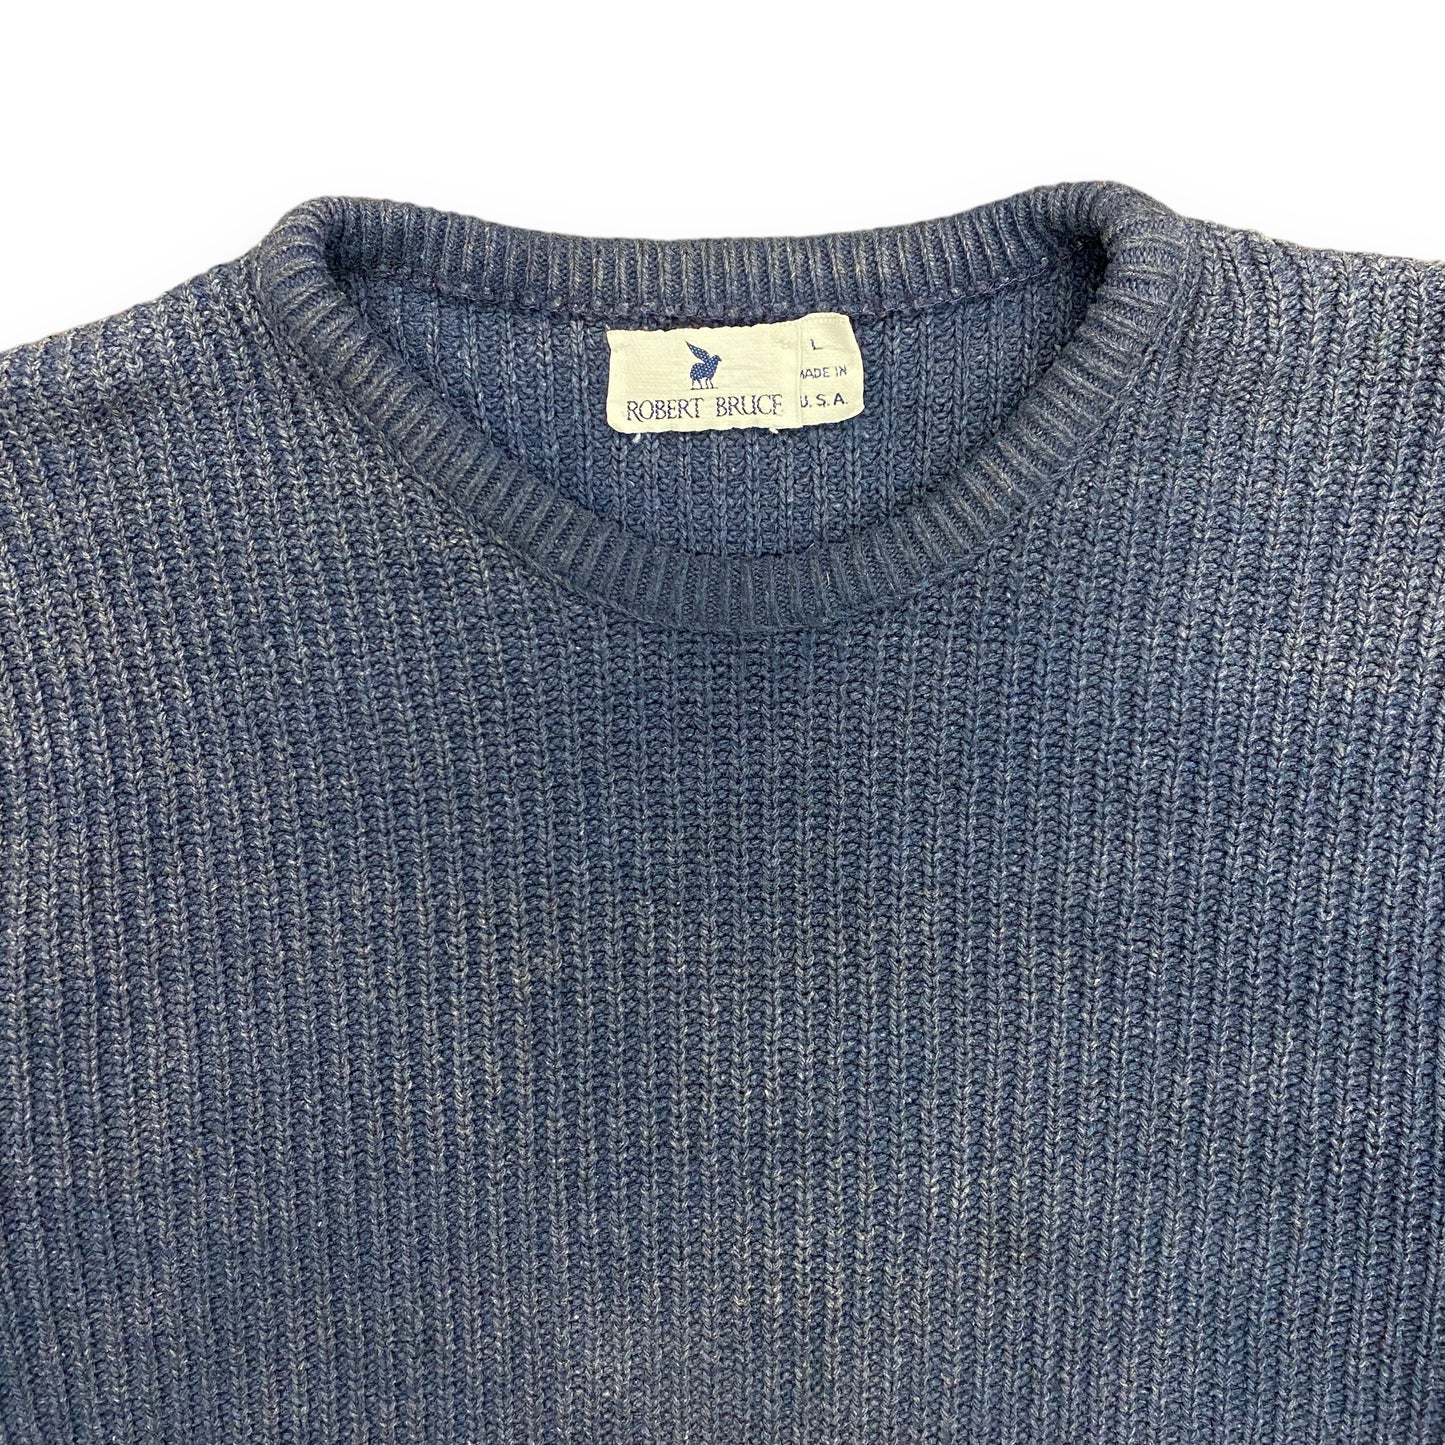 Vintage 1980s Robert Bruce Navy Blue Knit Sweater - Size Large  my